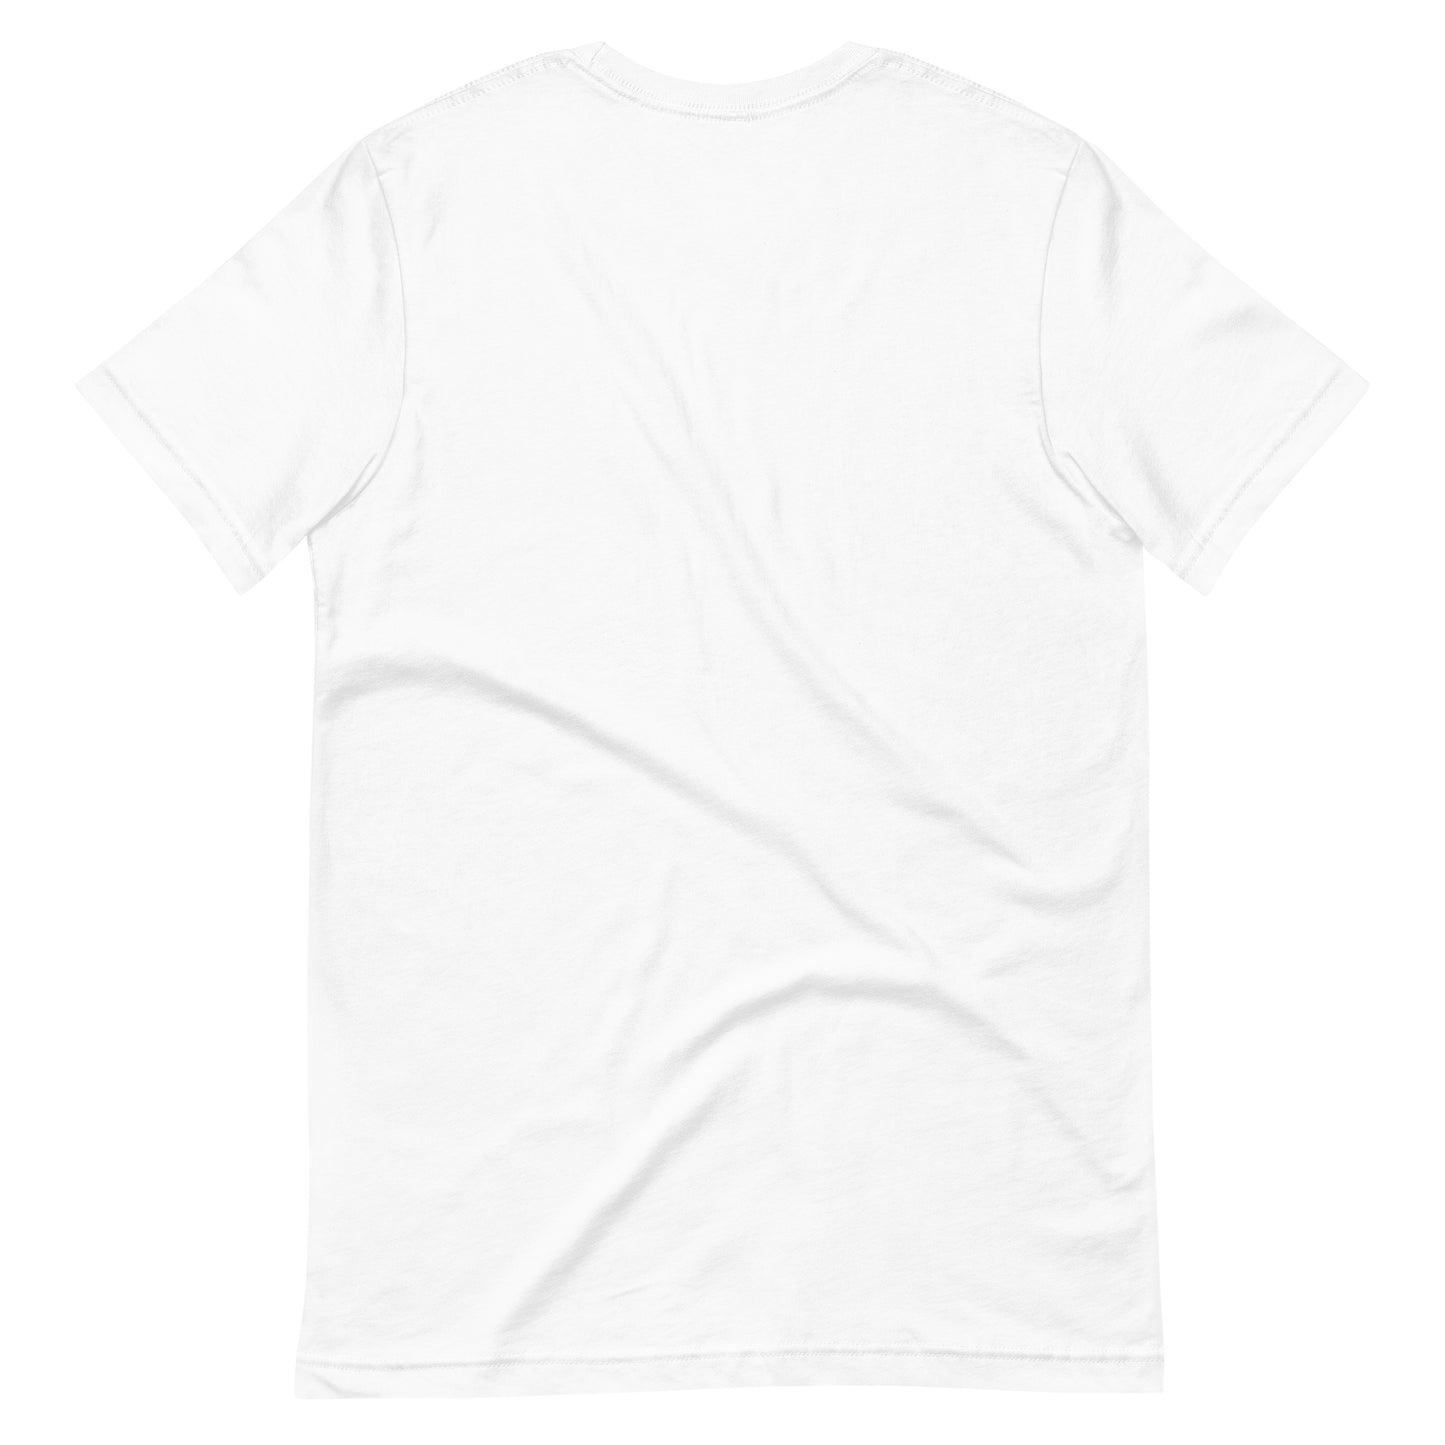 Love&Tease Unisex T-Shirt